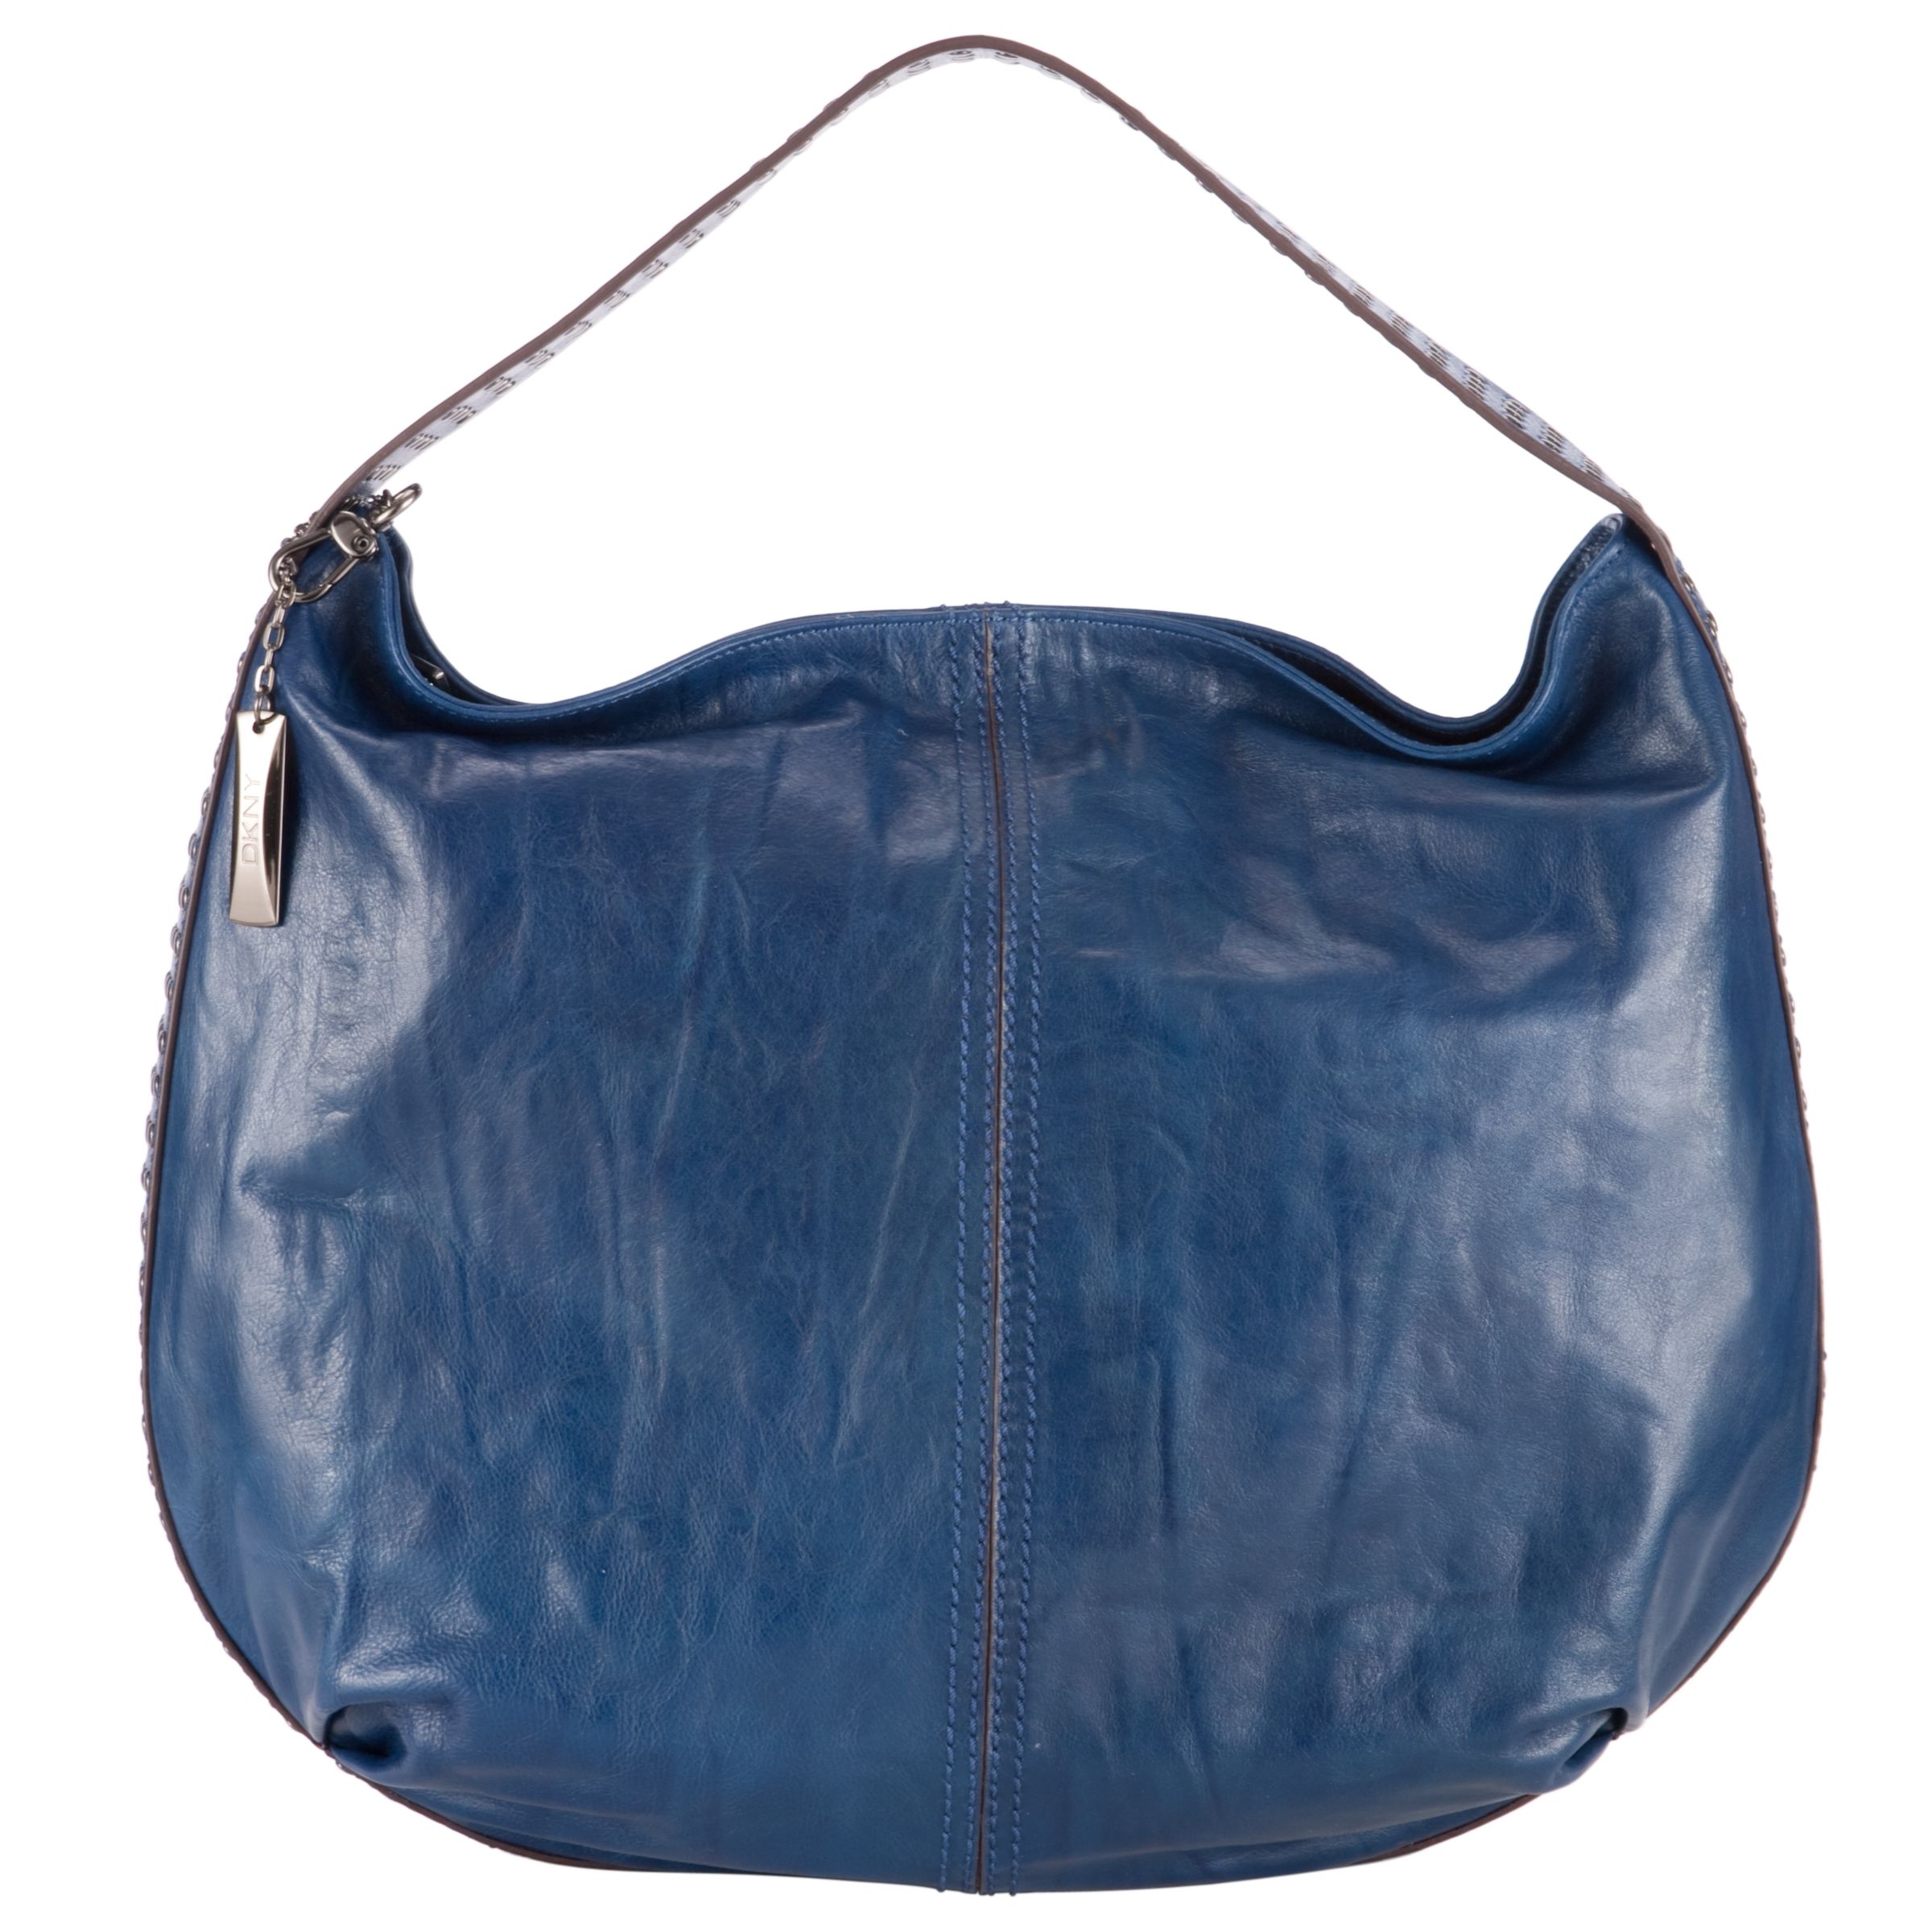 DKNY Burnished Leather Studded Large Hobo Handbag, Sapphire at John Lewis